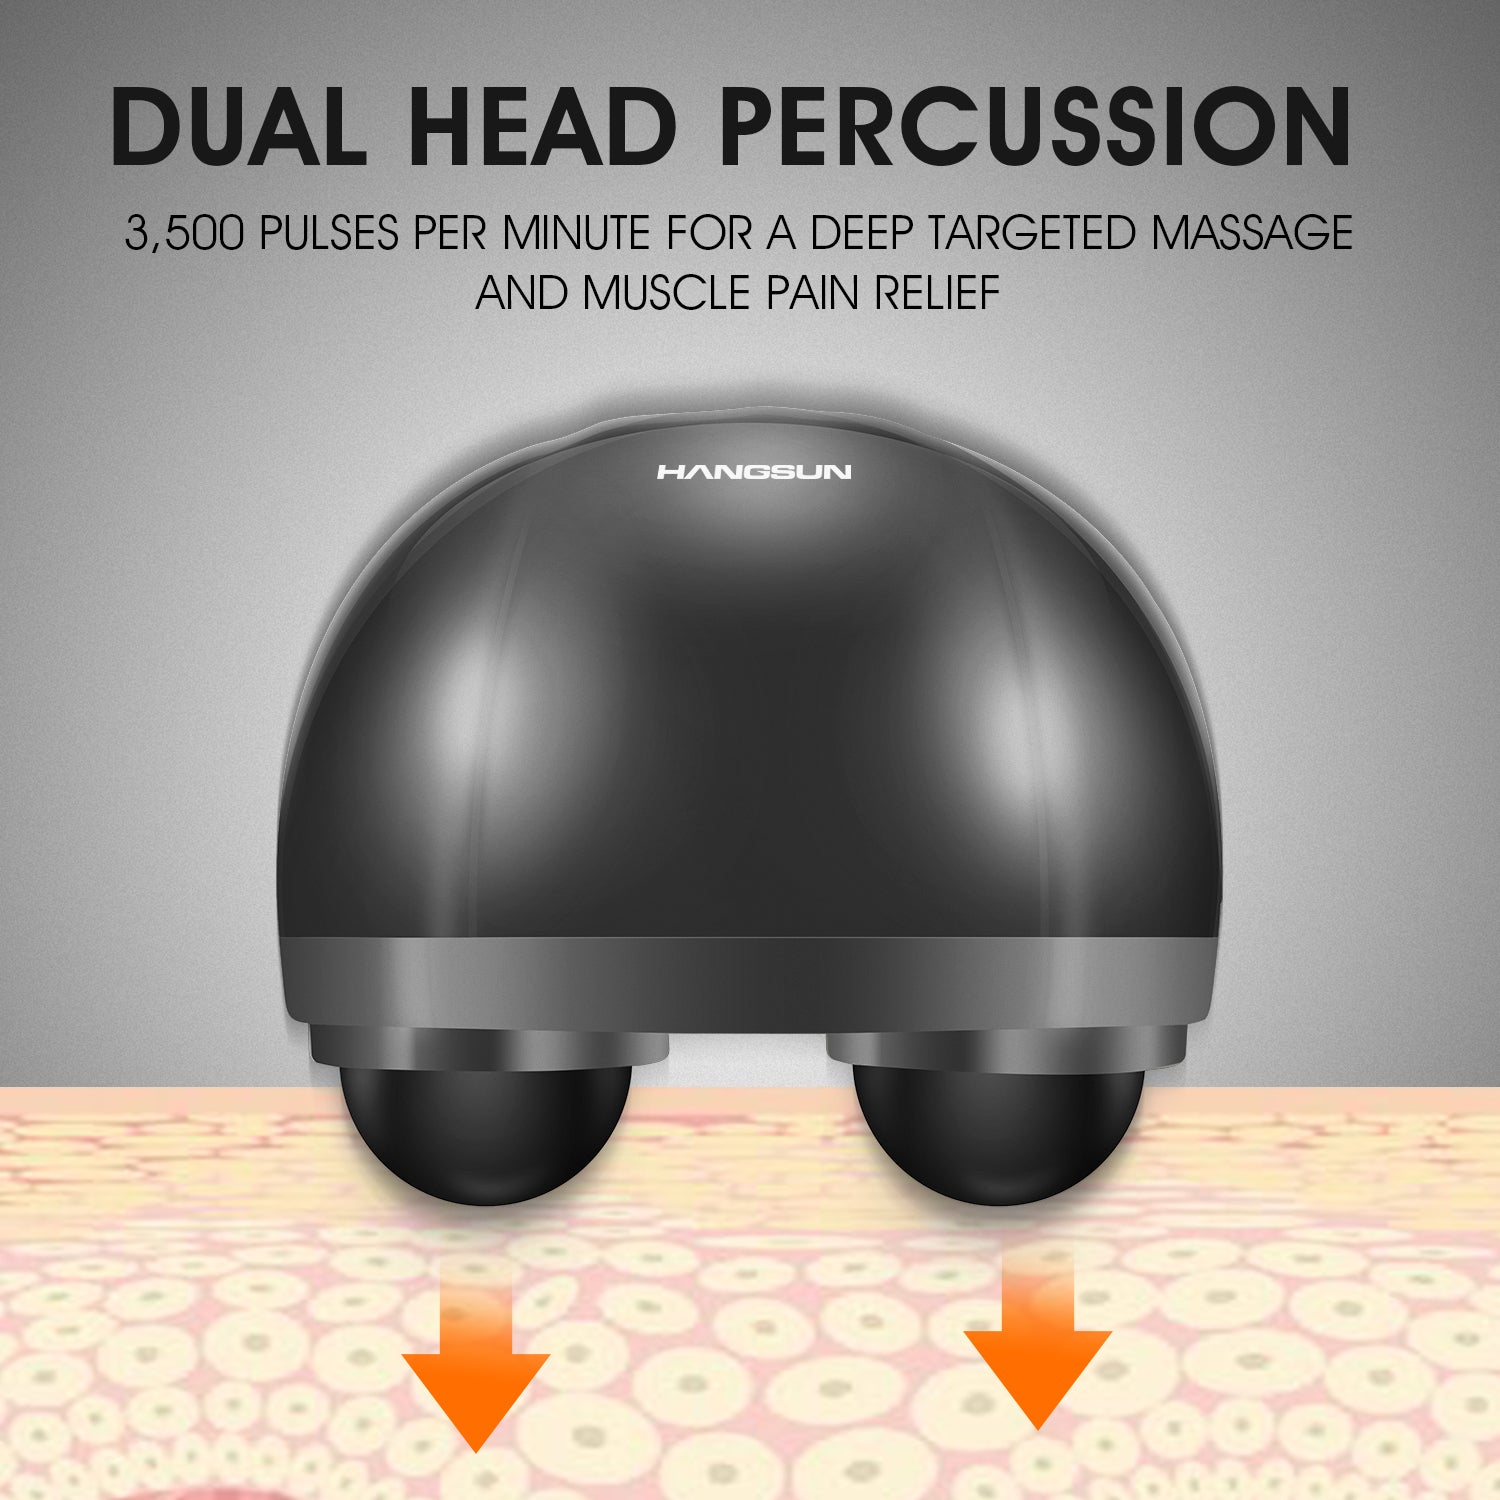 Hangsun Handheld Massager MG460